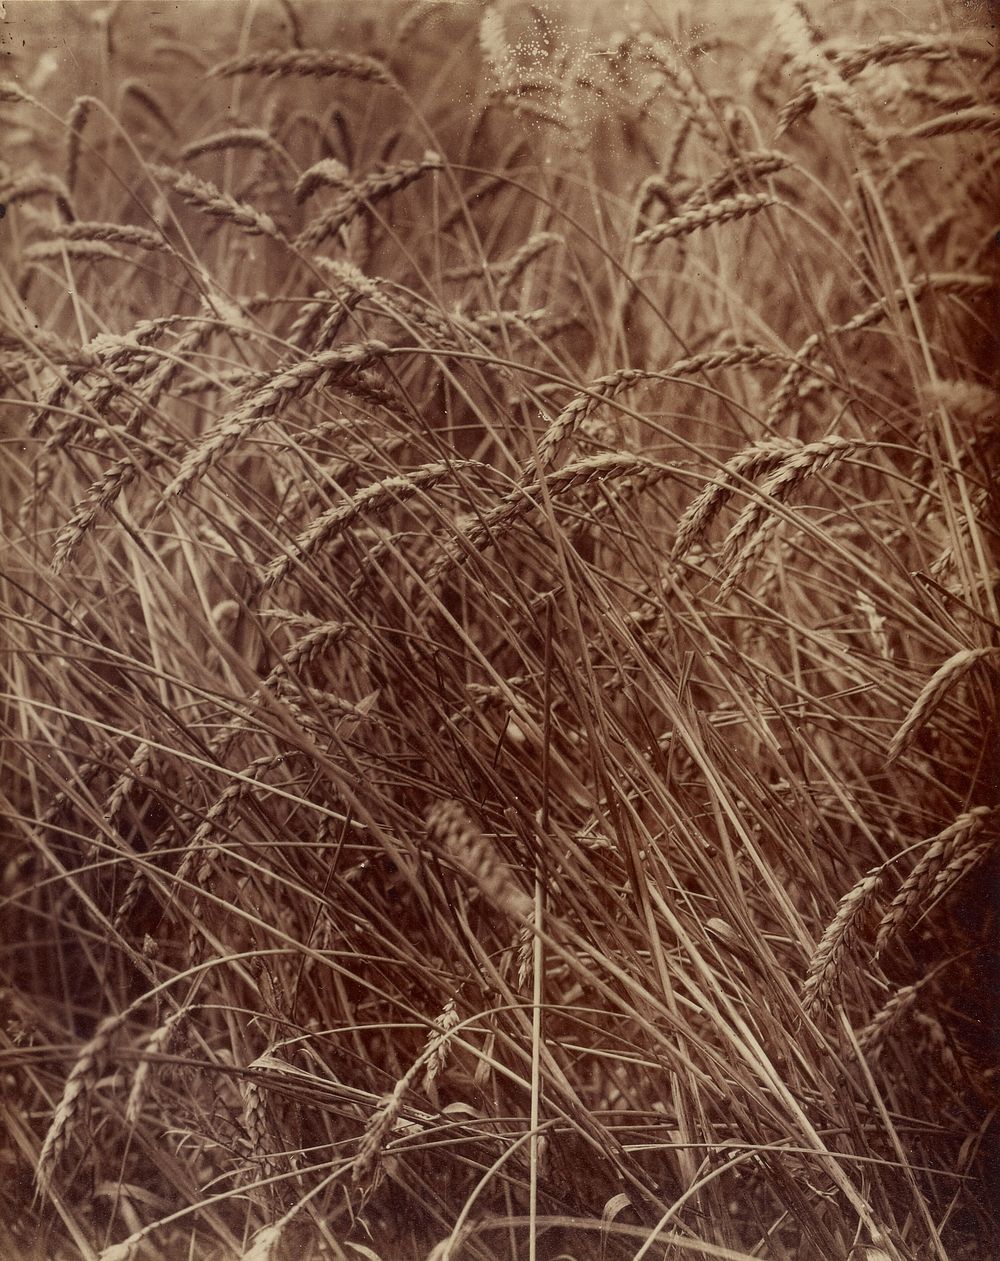 Wheat by Eugène Atget